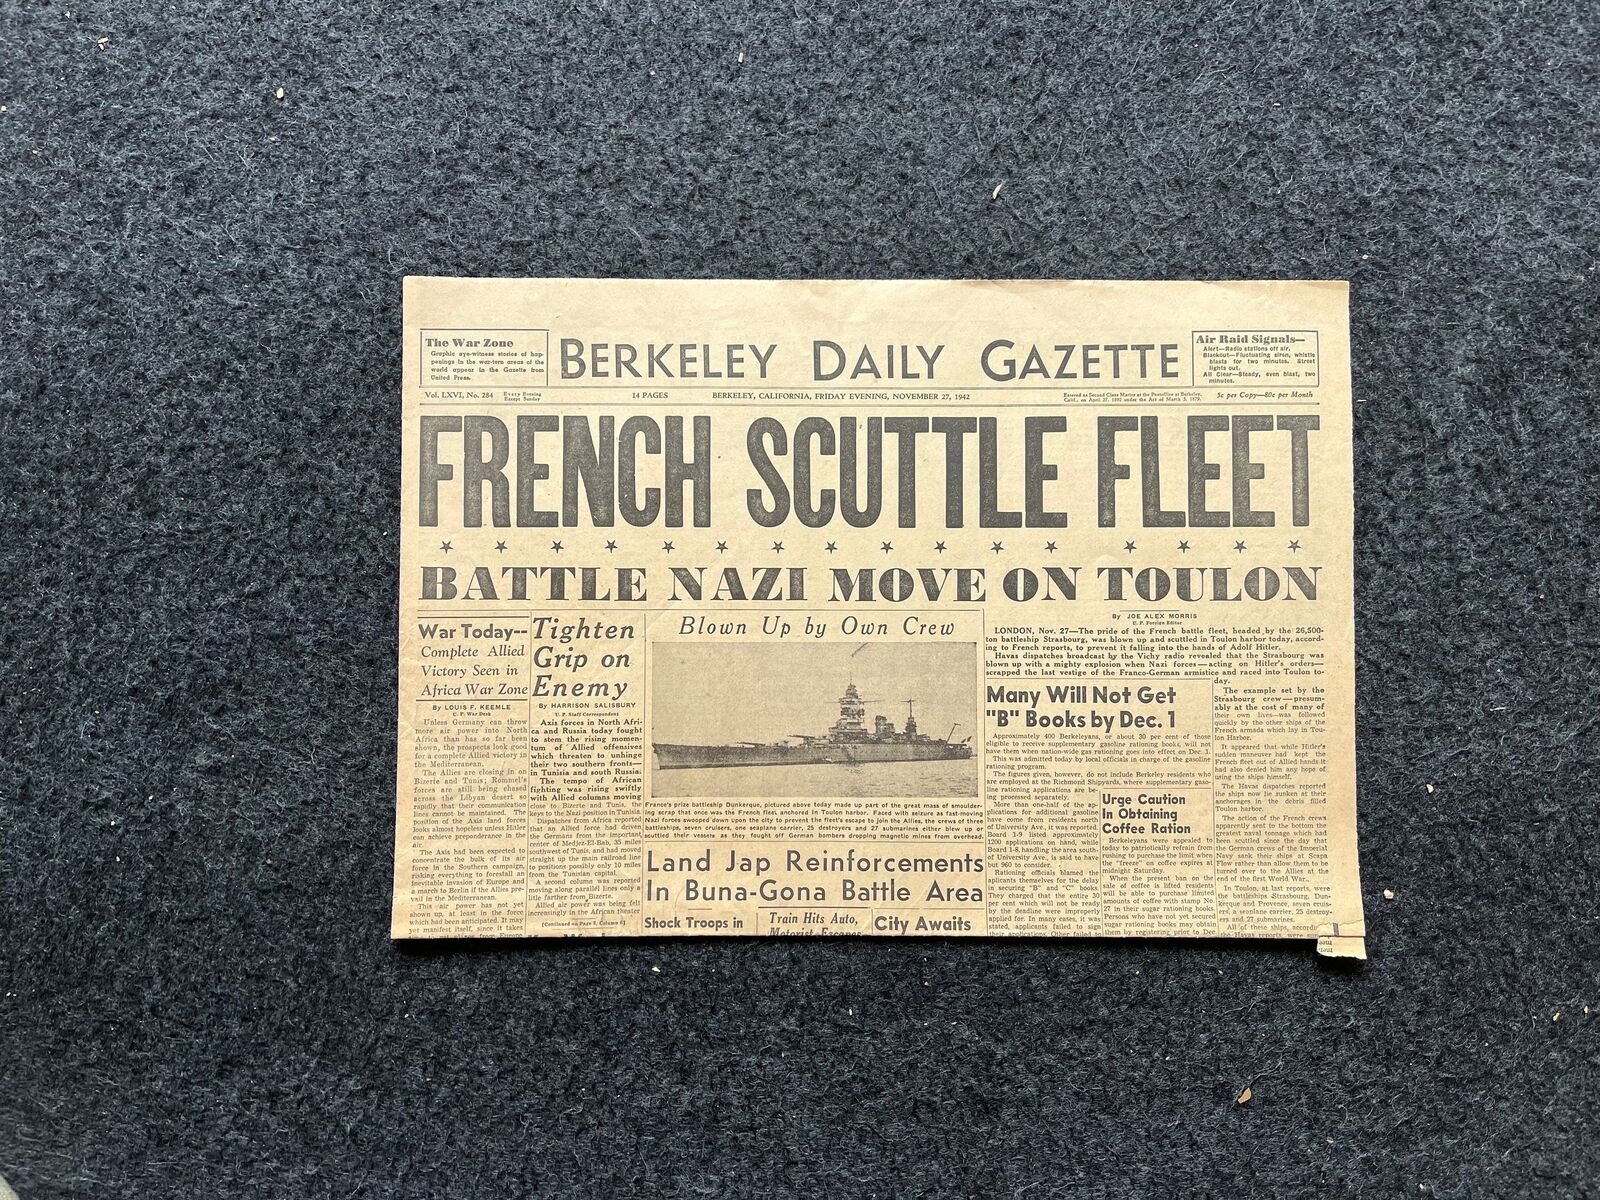 WW2 1940 France Scuttles Fleet Vintage Newspaper, German Advances into France, 